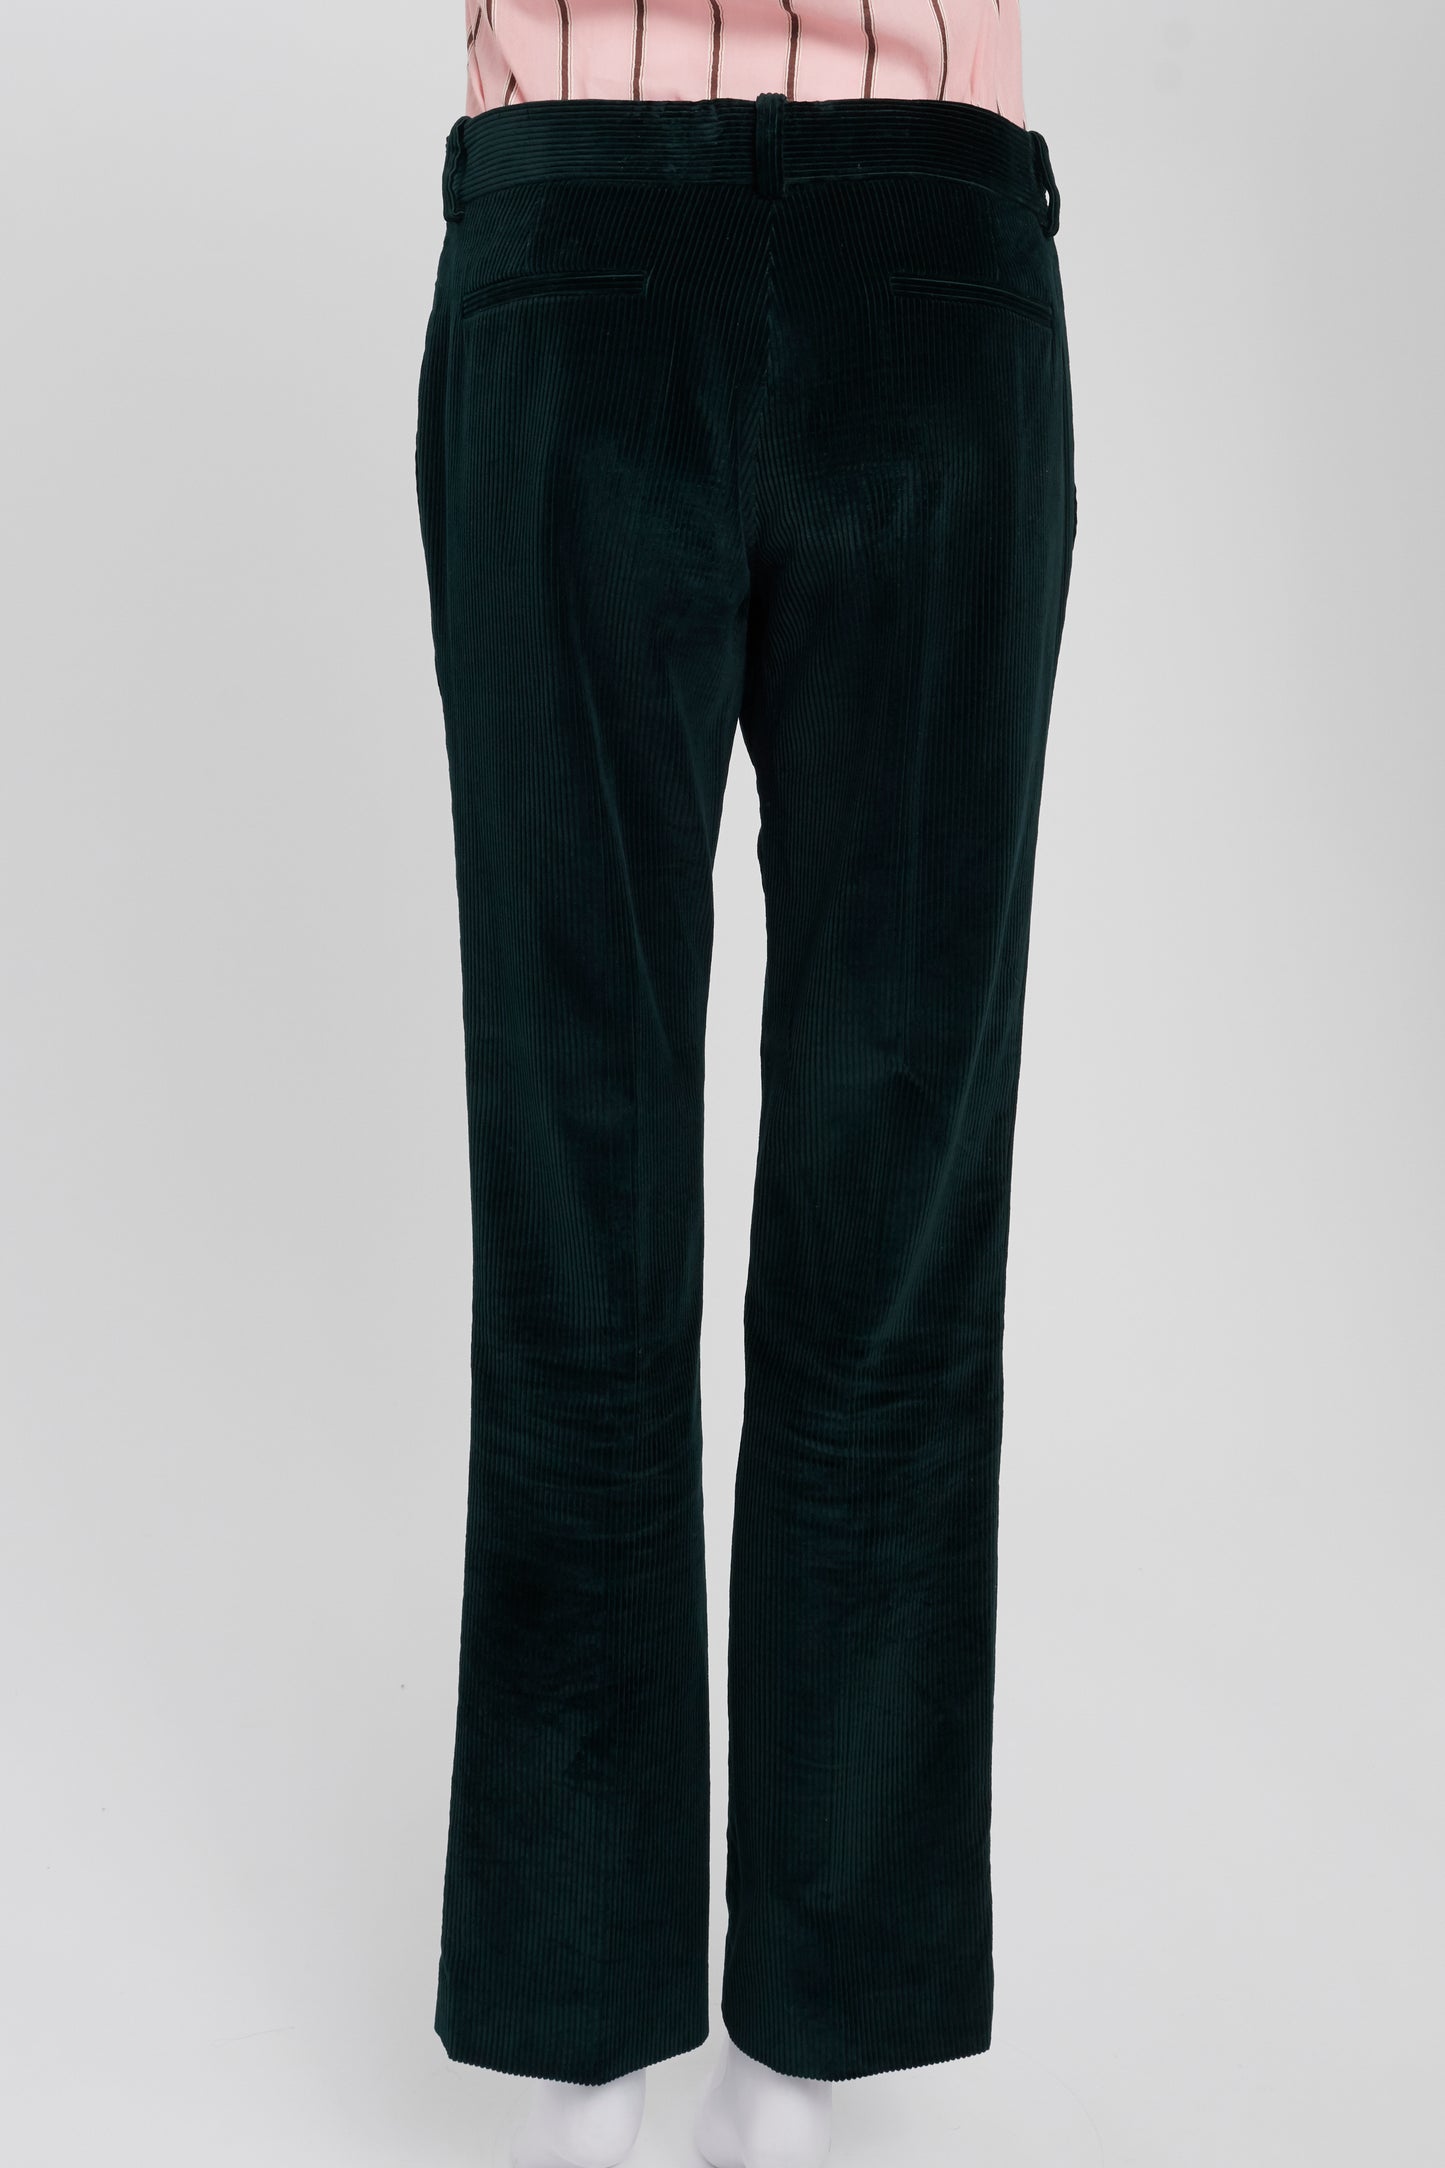 Emerald Green Cord Trousers